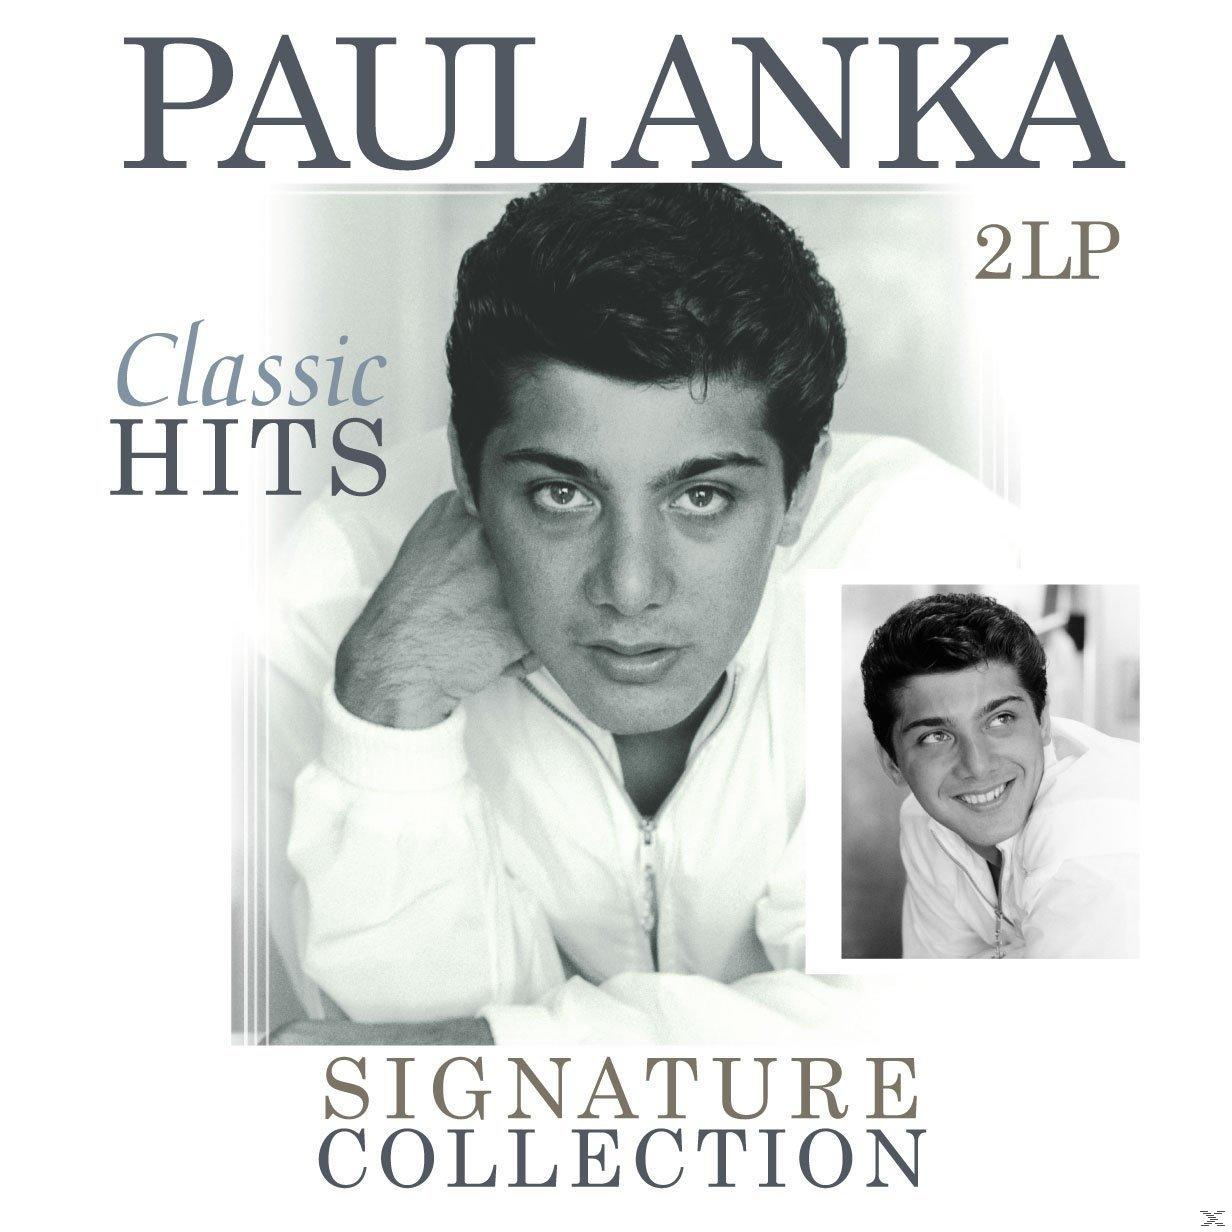 CLASSIC SIGNATURE - (Vinyl) Anka - COLLECTION HITS Paul -